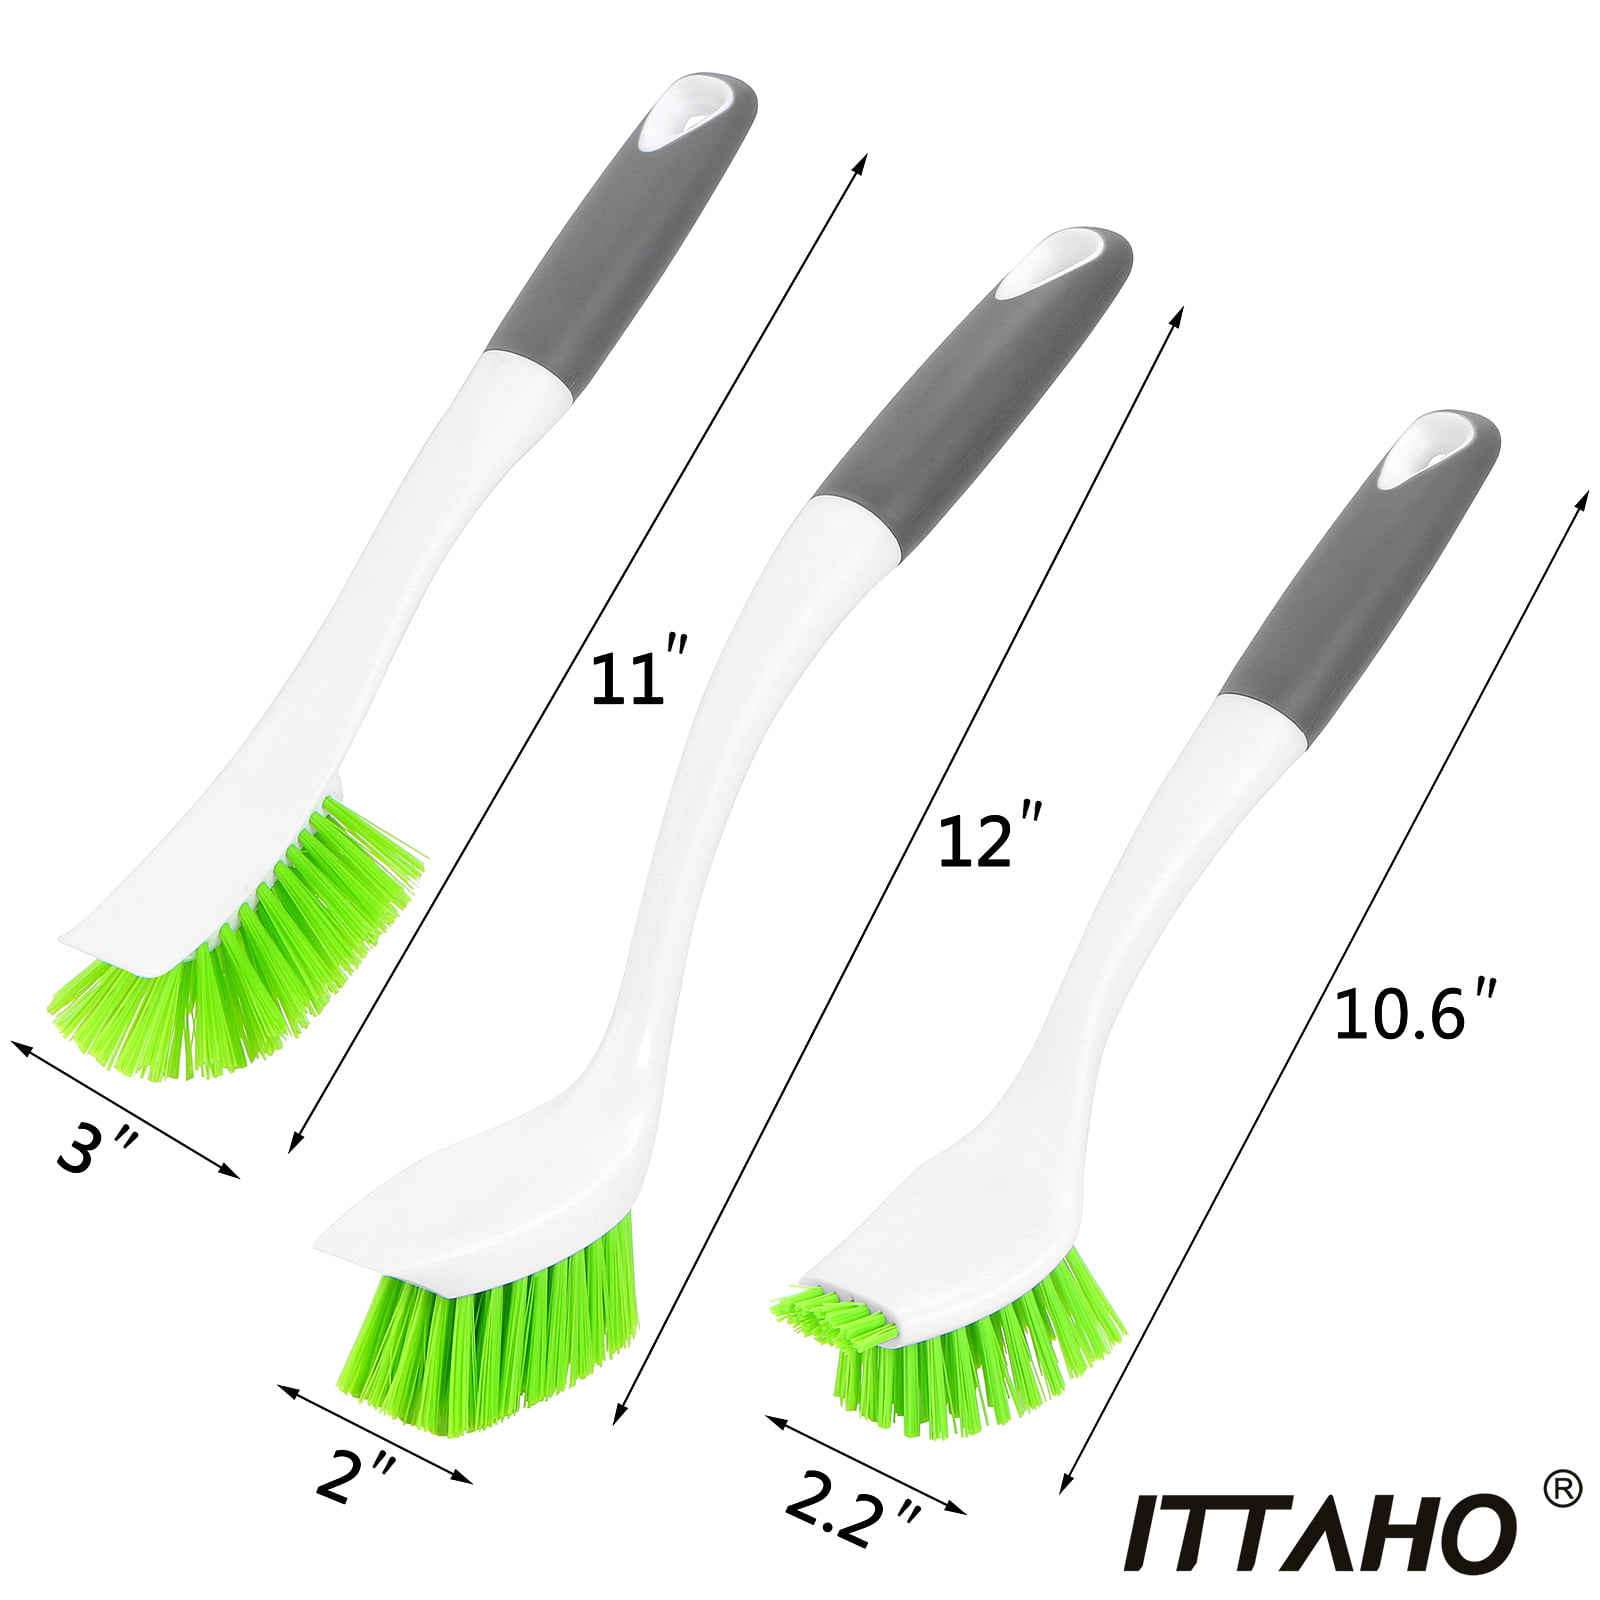 ITTAHO 3 Pack Dish Brush Set, Rubber Kitchen Scrub Brush for Cleaning -  Green 